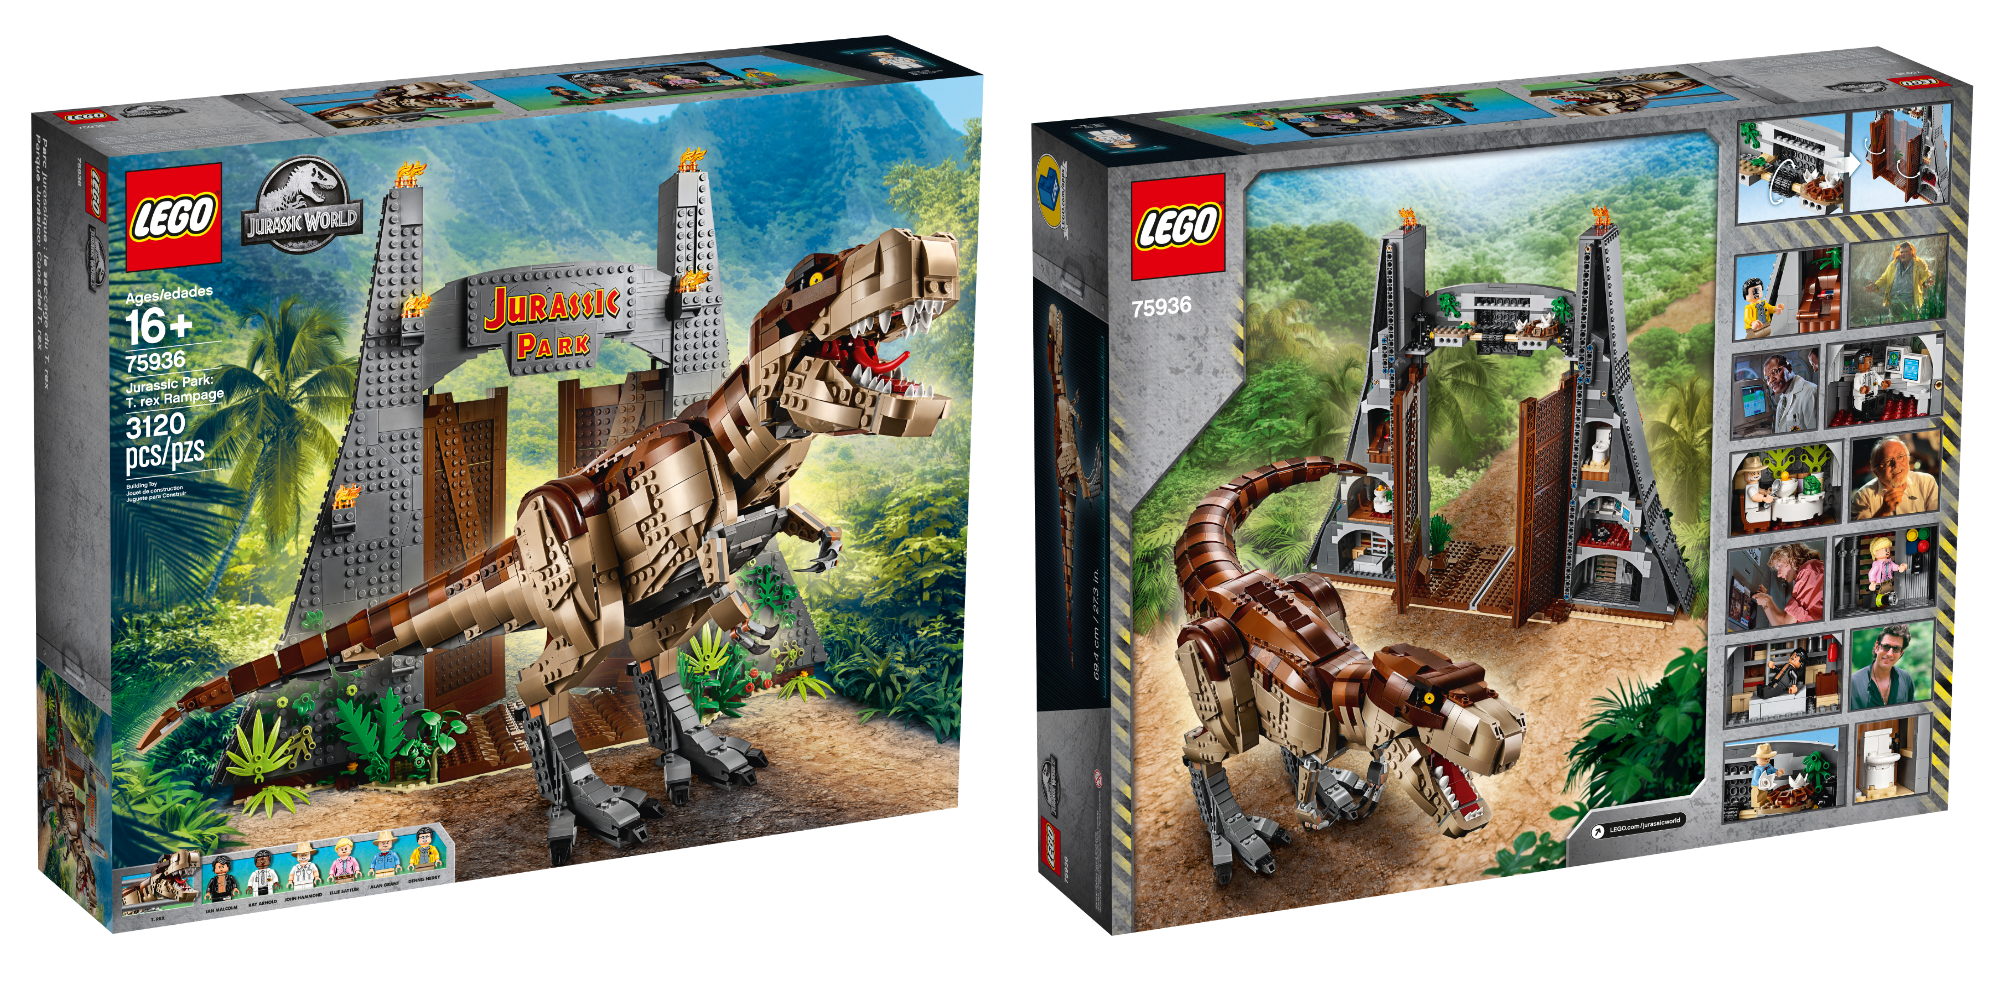 LEGO Jurassic Park Box Art